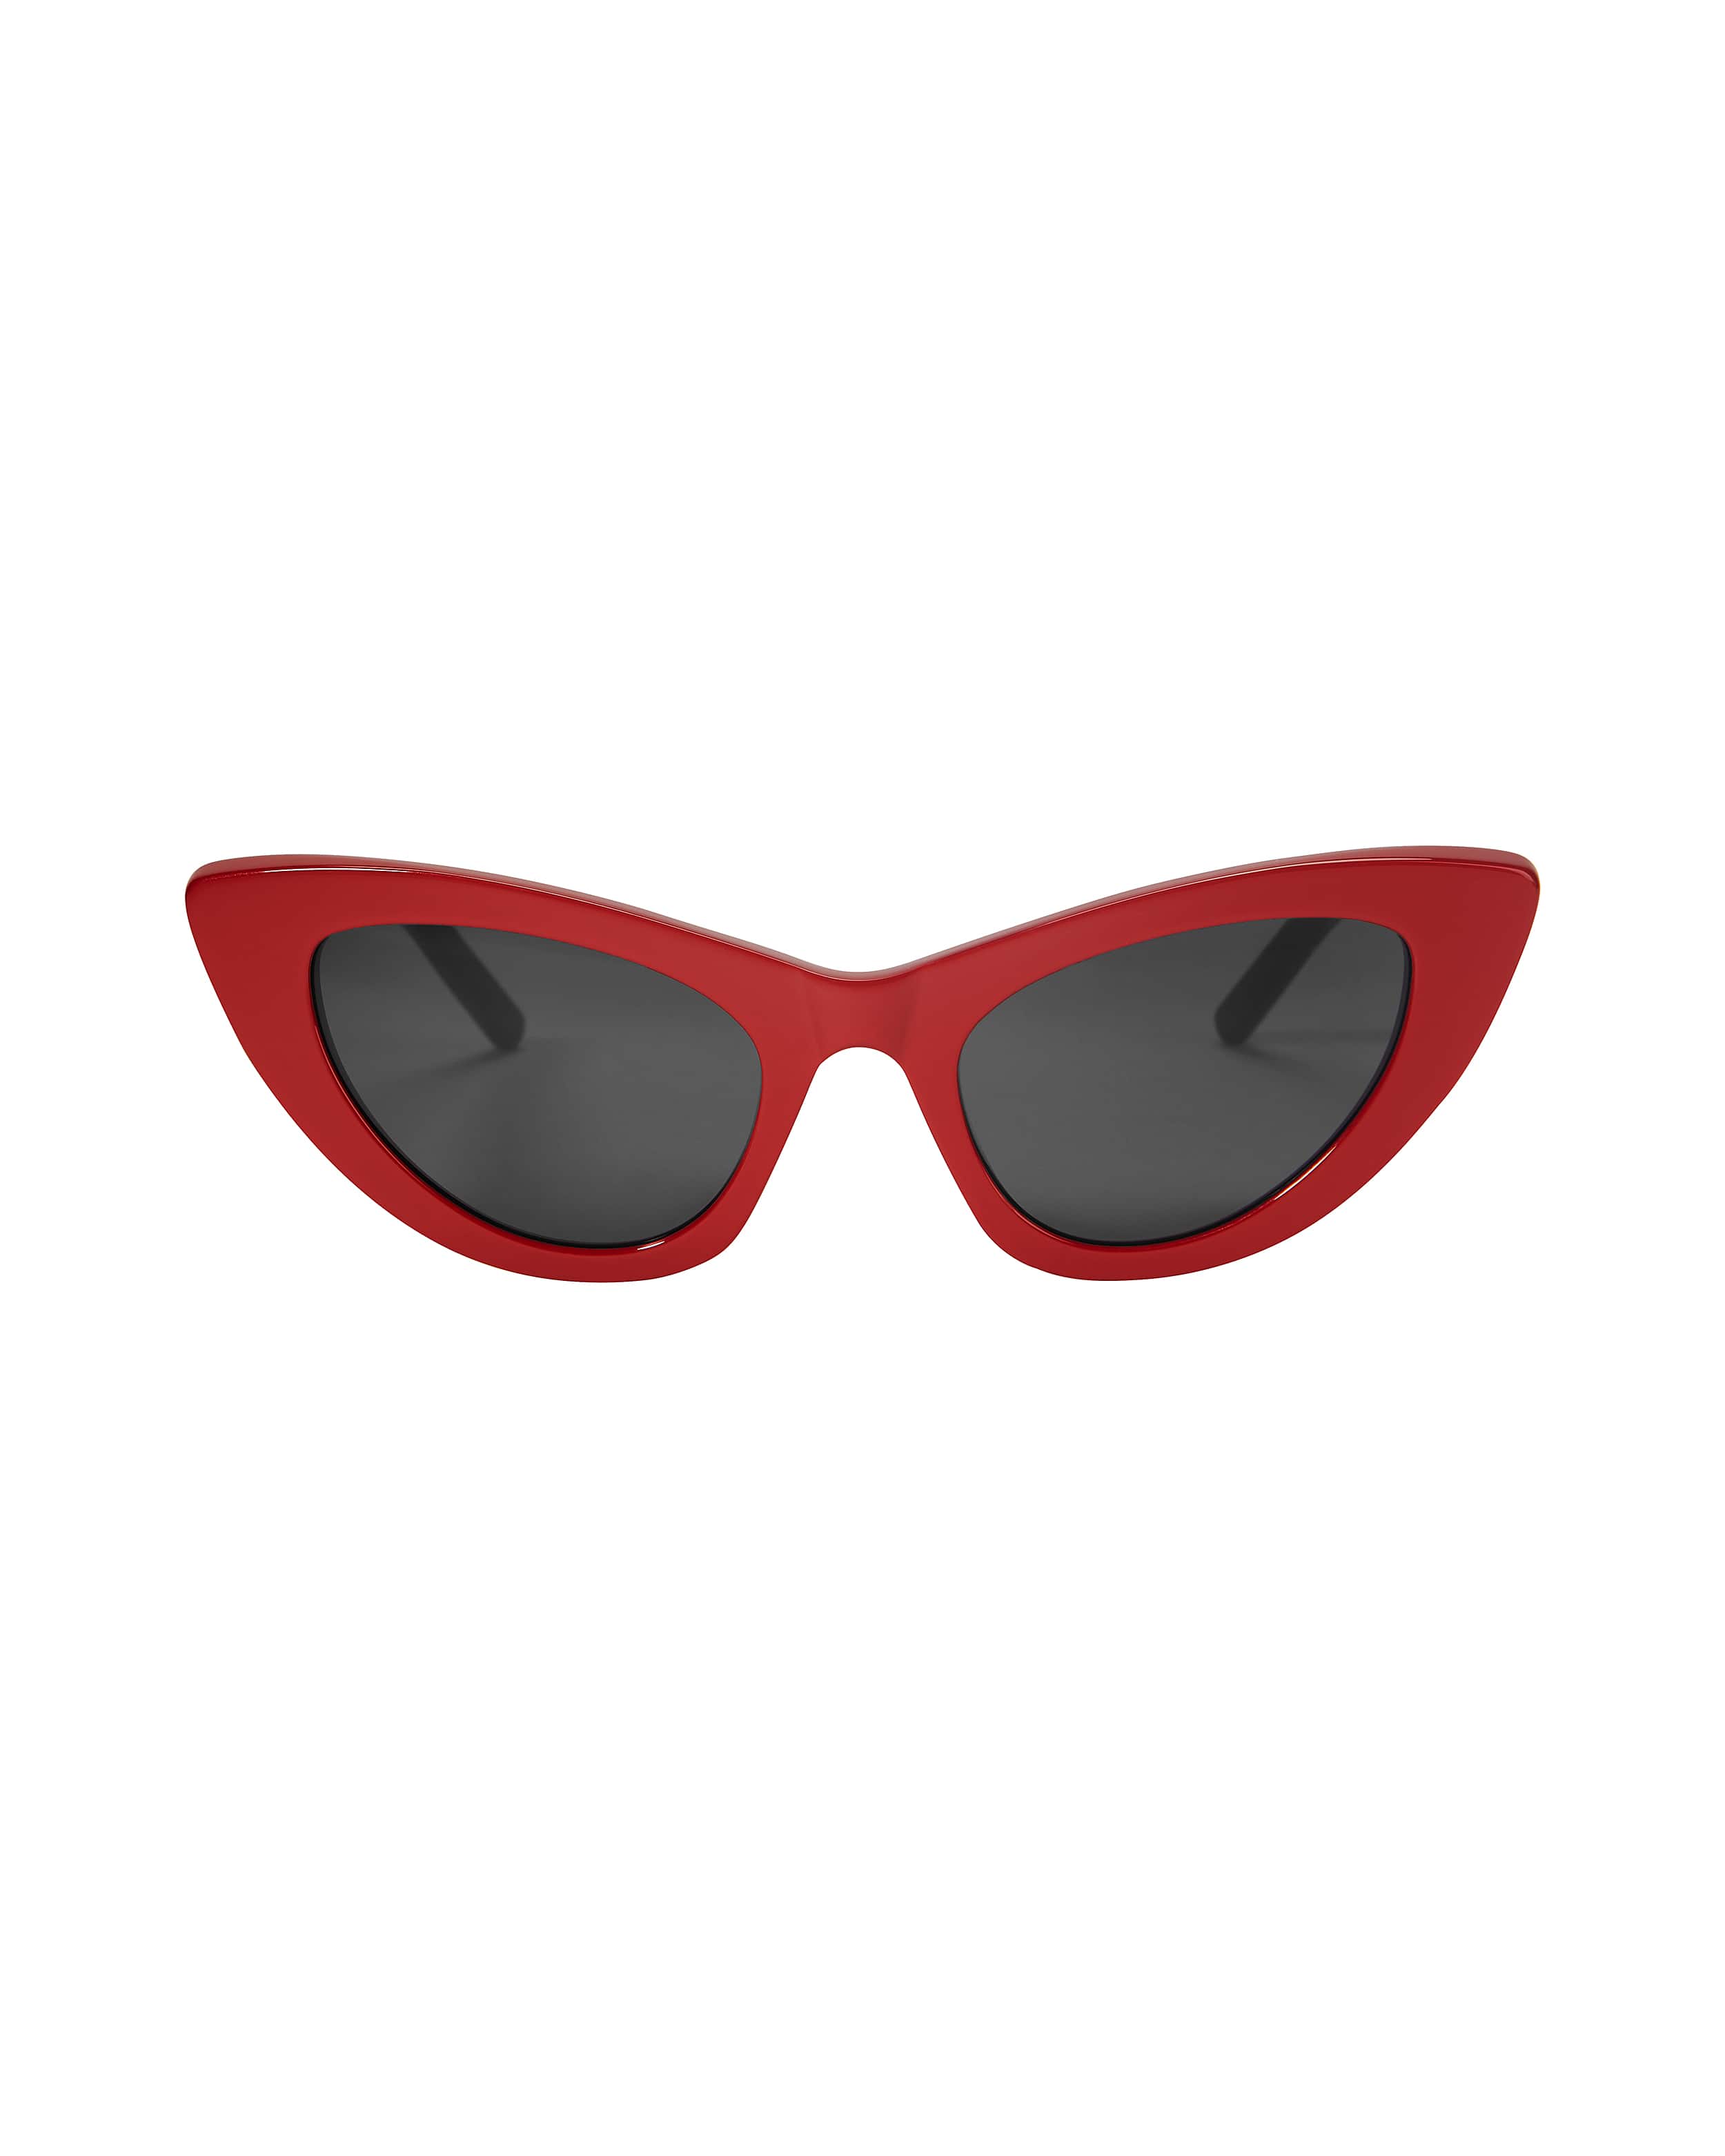 Intermix_Saint_Laurent_Lily_Sunglasses.jpg